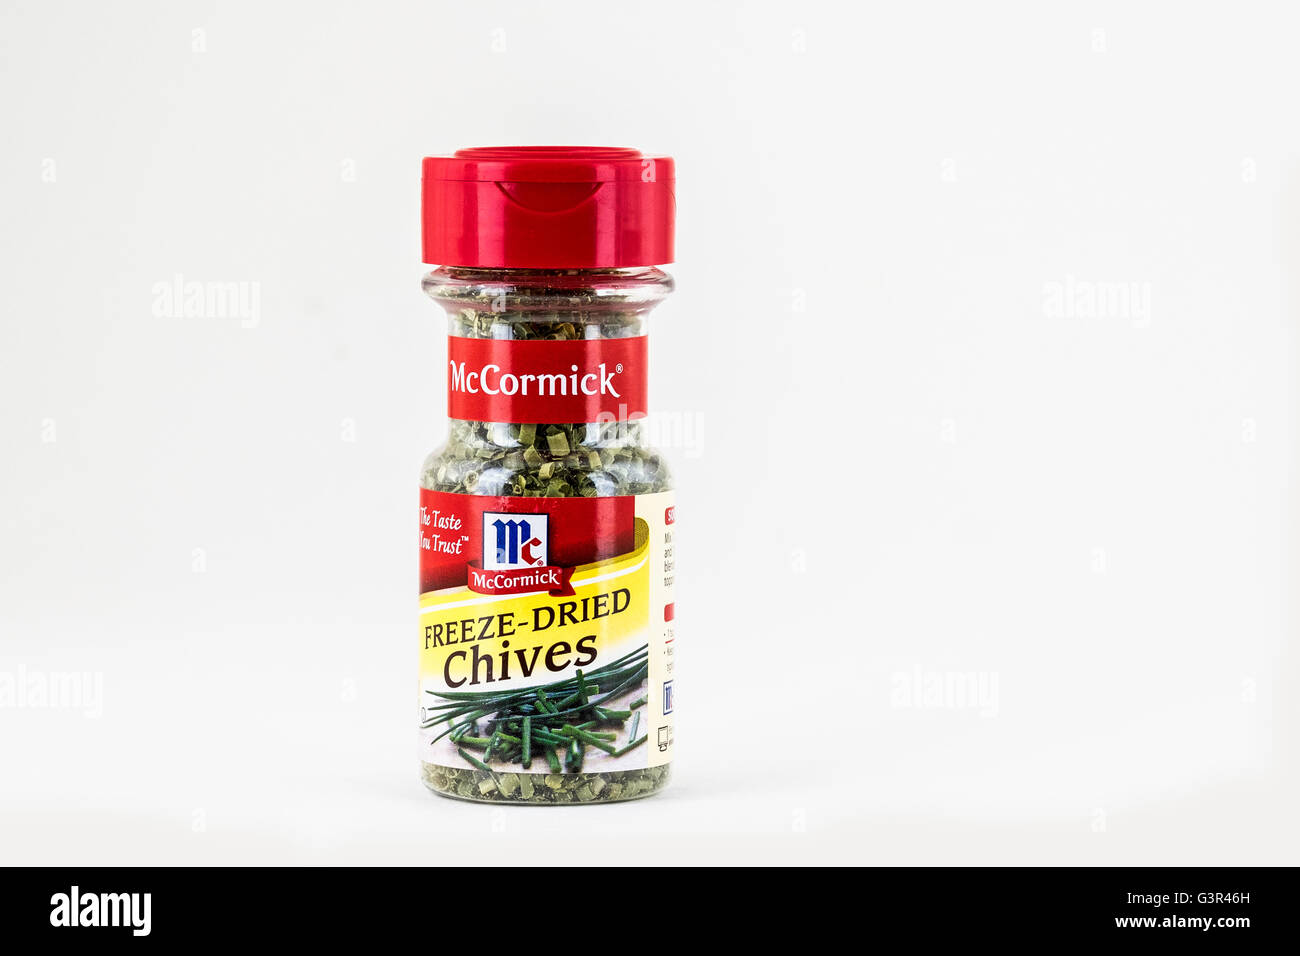 A jar of McCormick brand Freeze-Dried Chives. Cutout, USA. Stock Photo